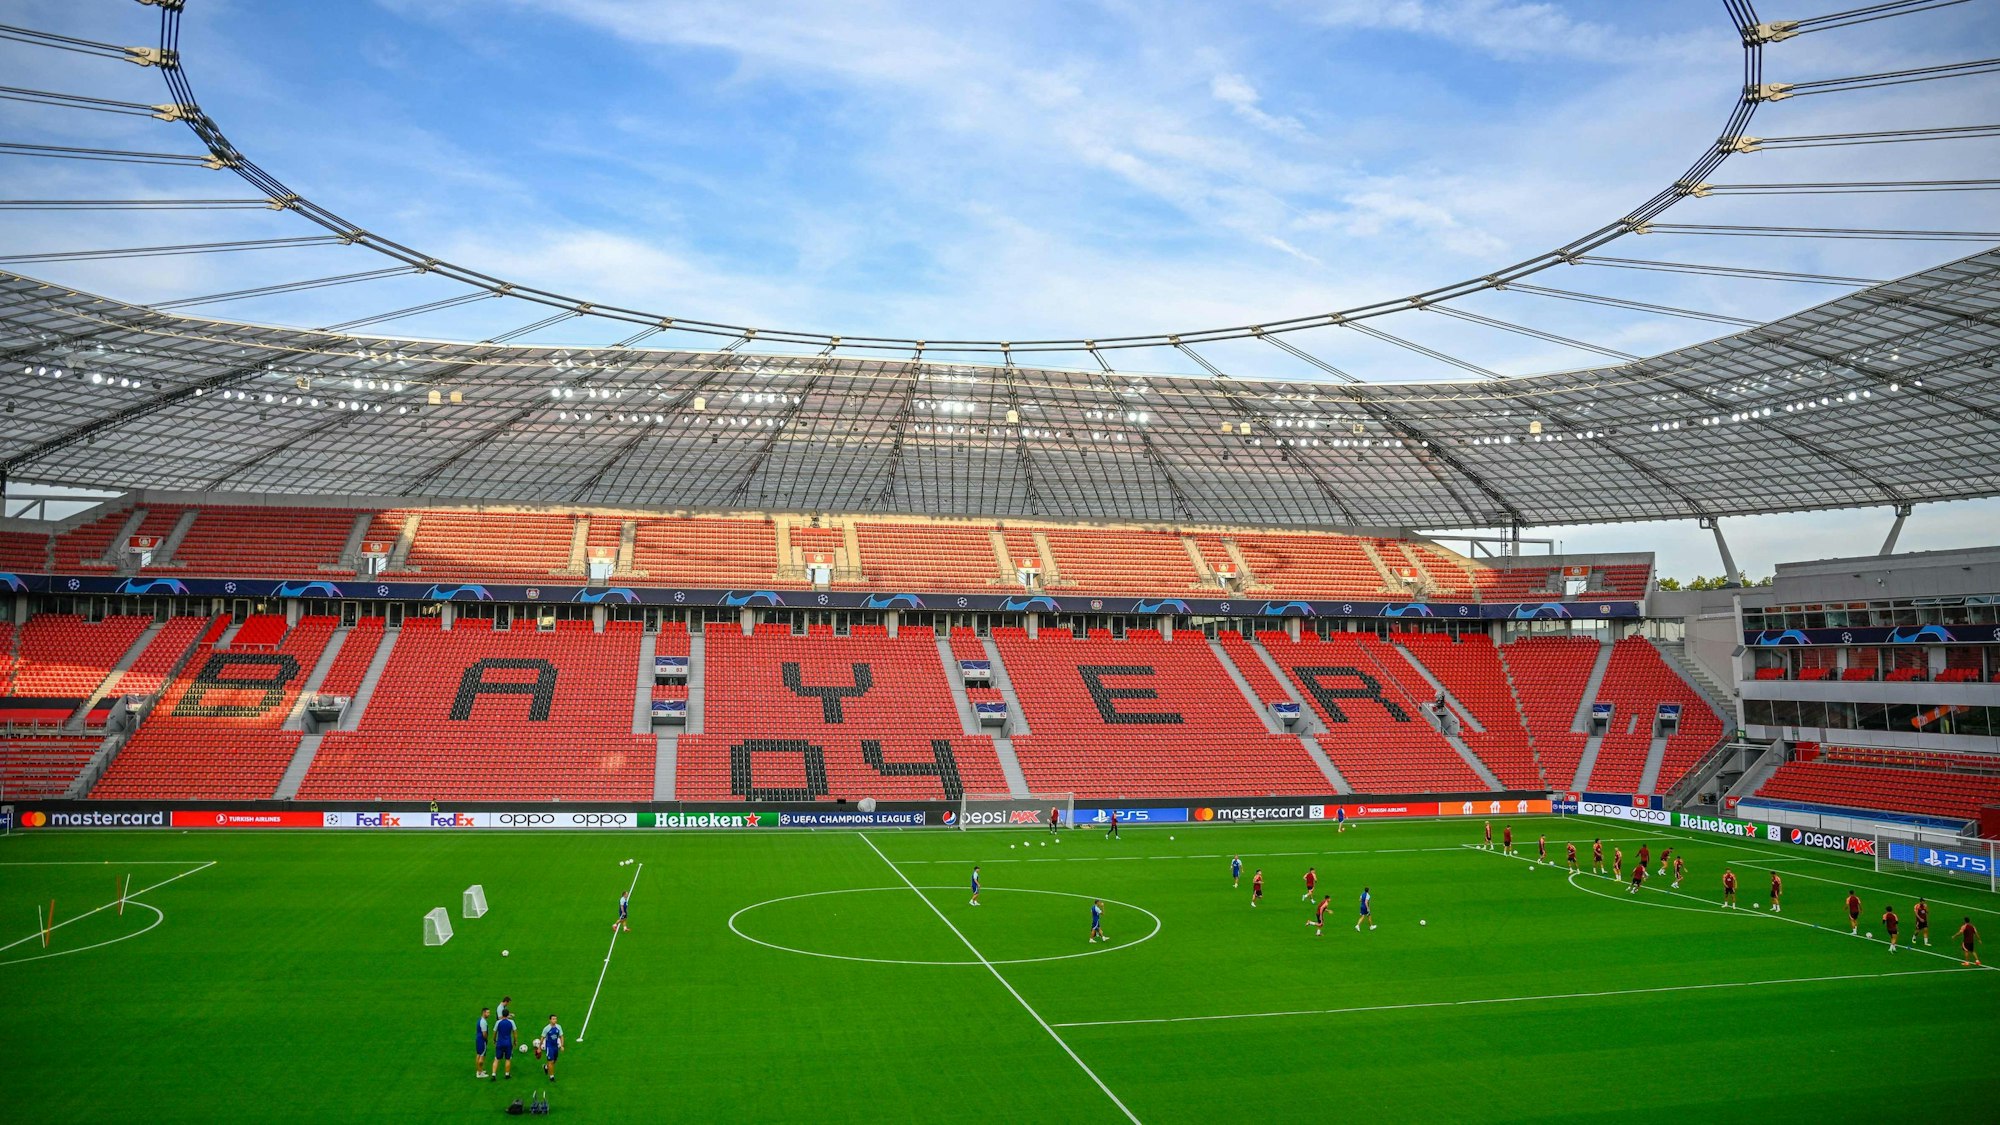 BayArena Stadium in Leverkusen